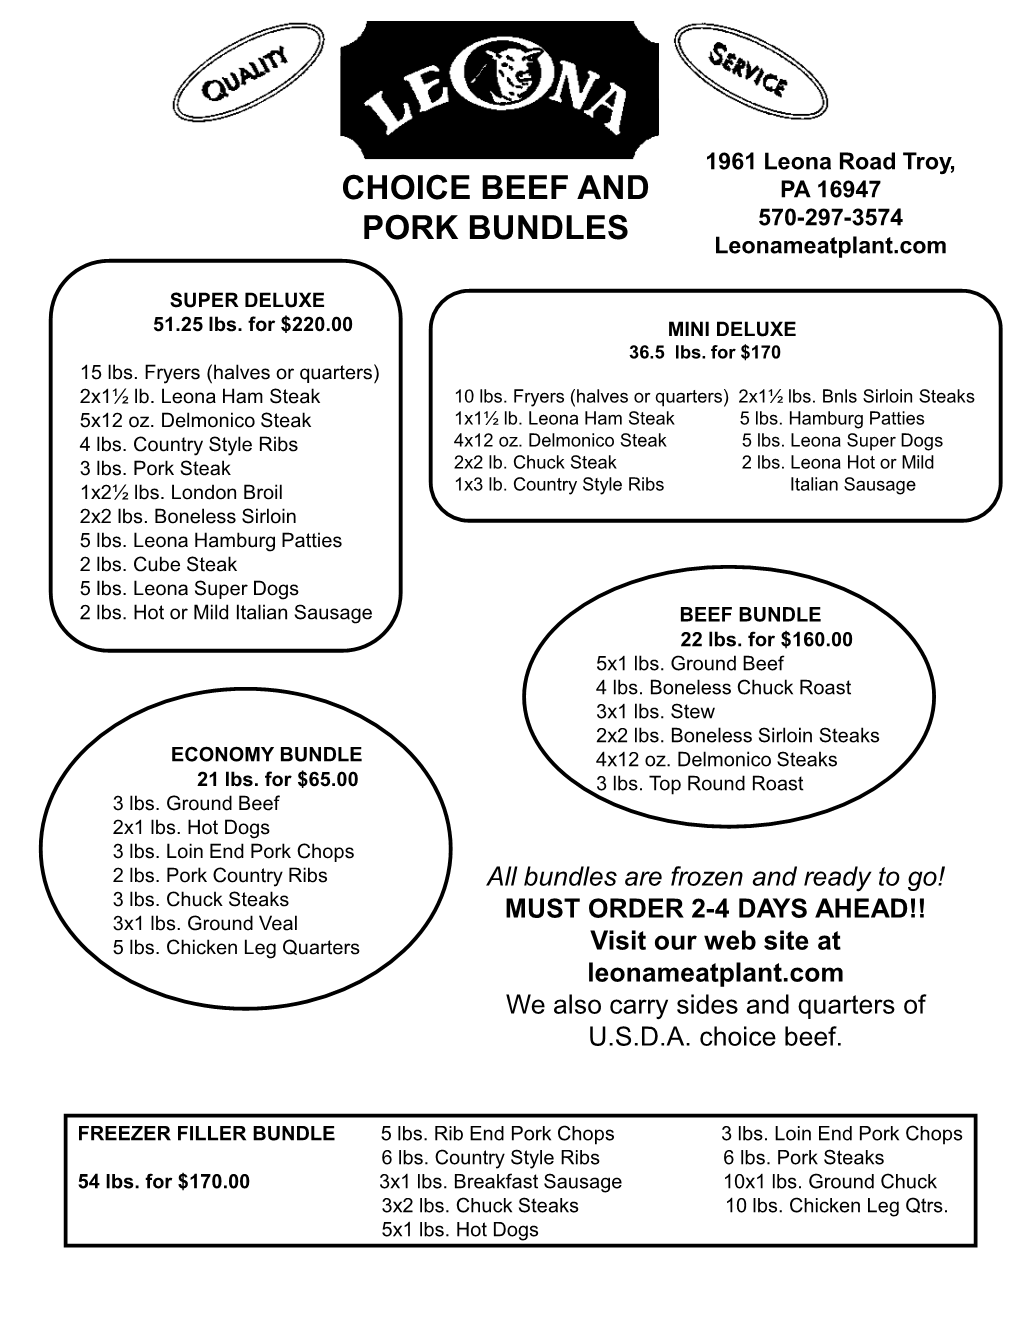 Choice Beef and Pork Bundles